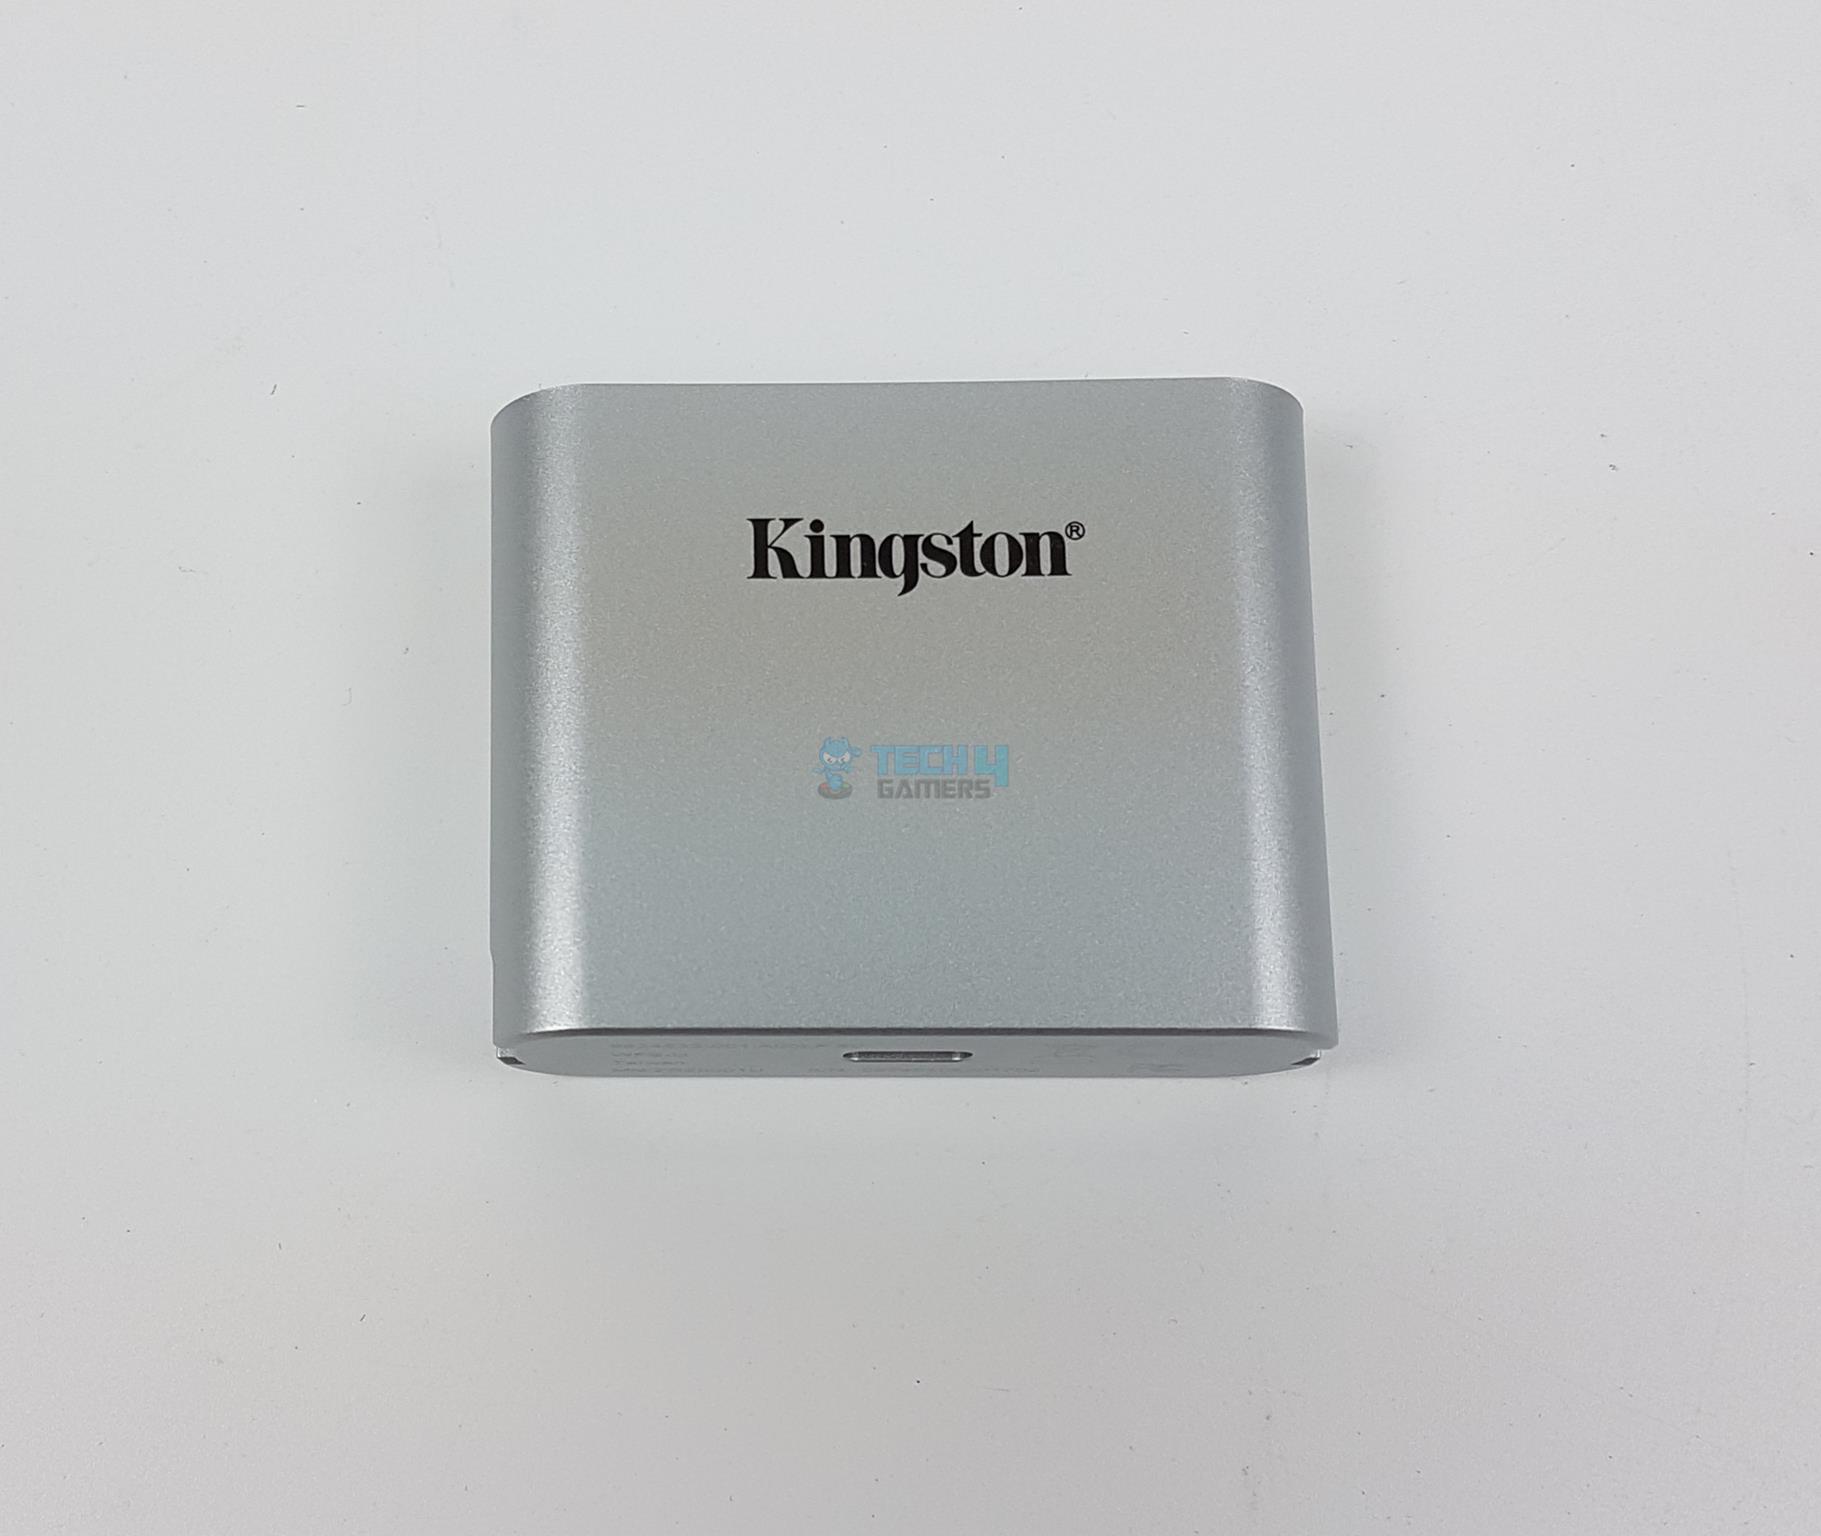 Kingston Workflow Station — miniHub Front